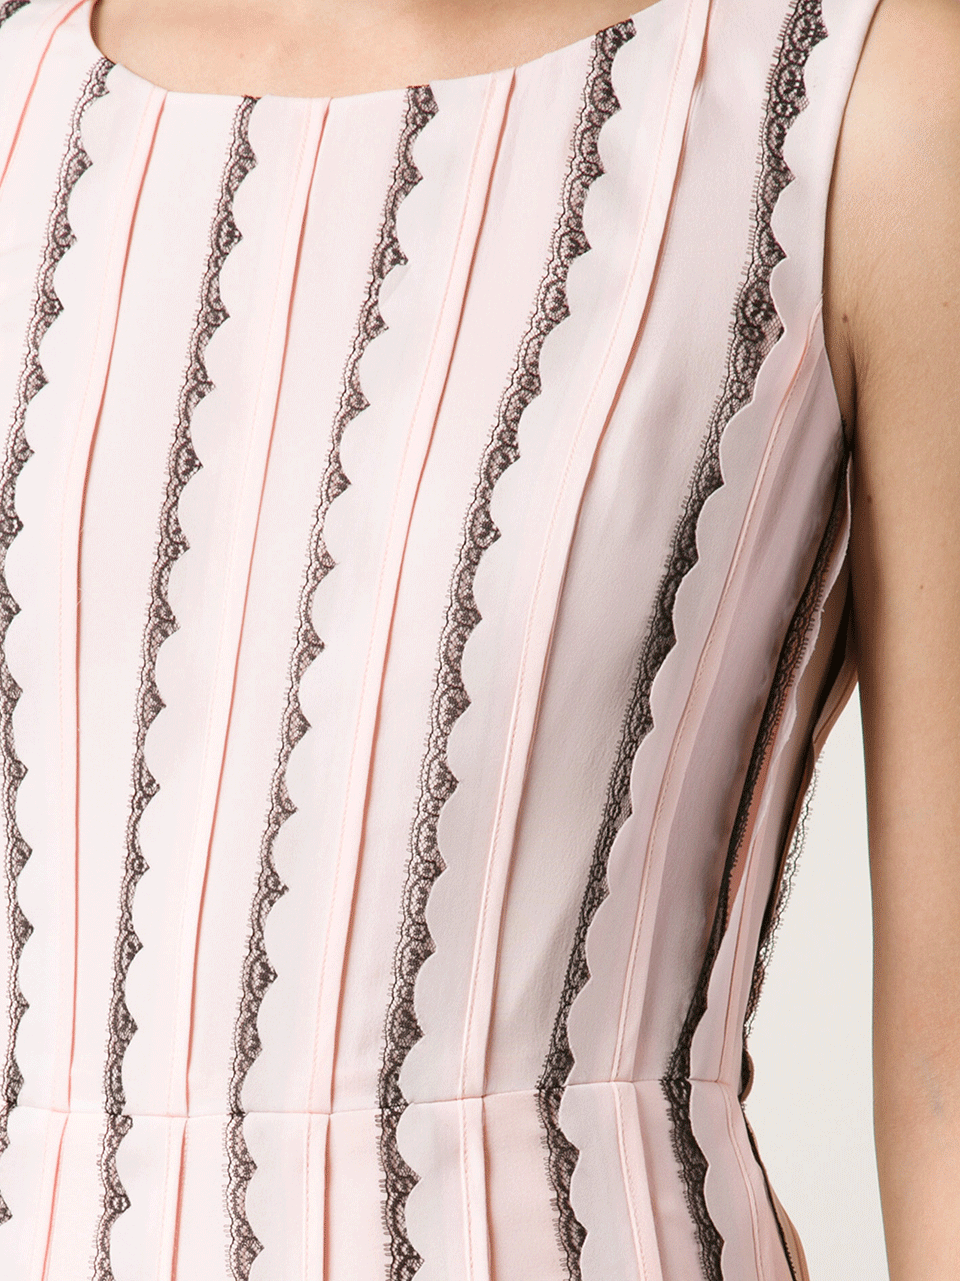 OSCAR DE LA RENTA-Lace Embroidered Dress-BLUSH